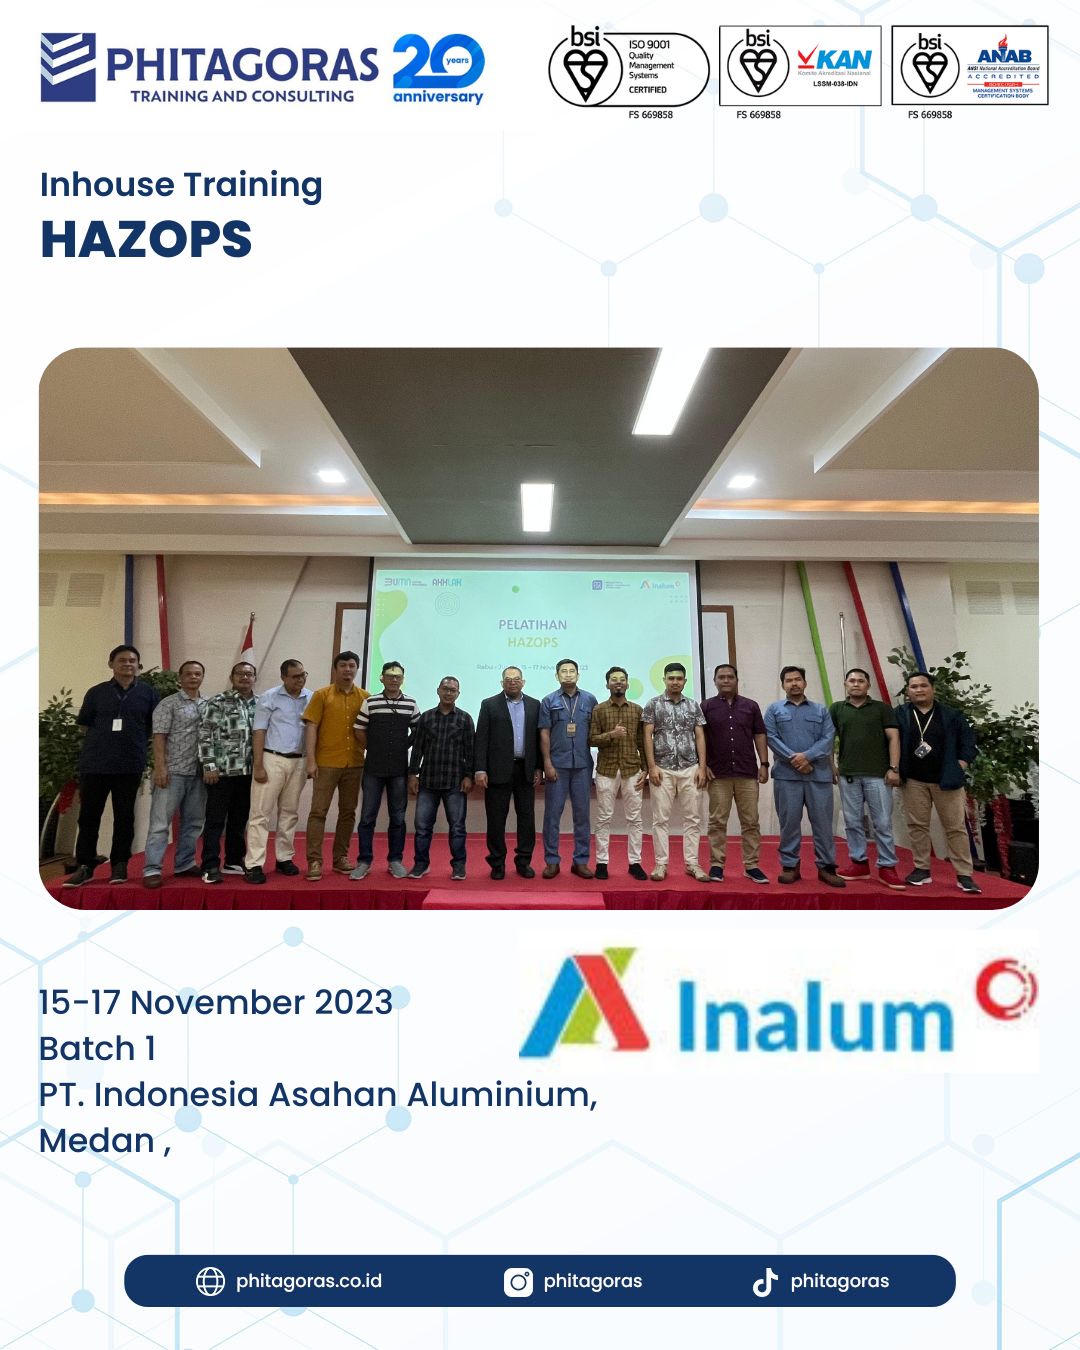 Inhouse Training HAZOPS - PT. Indonesia Asahan Aluminium, Medan, Batch 1